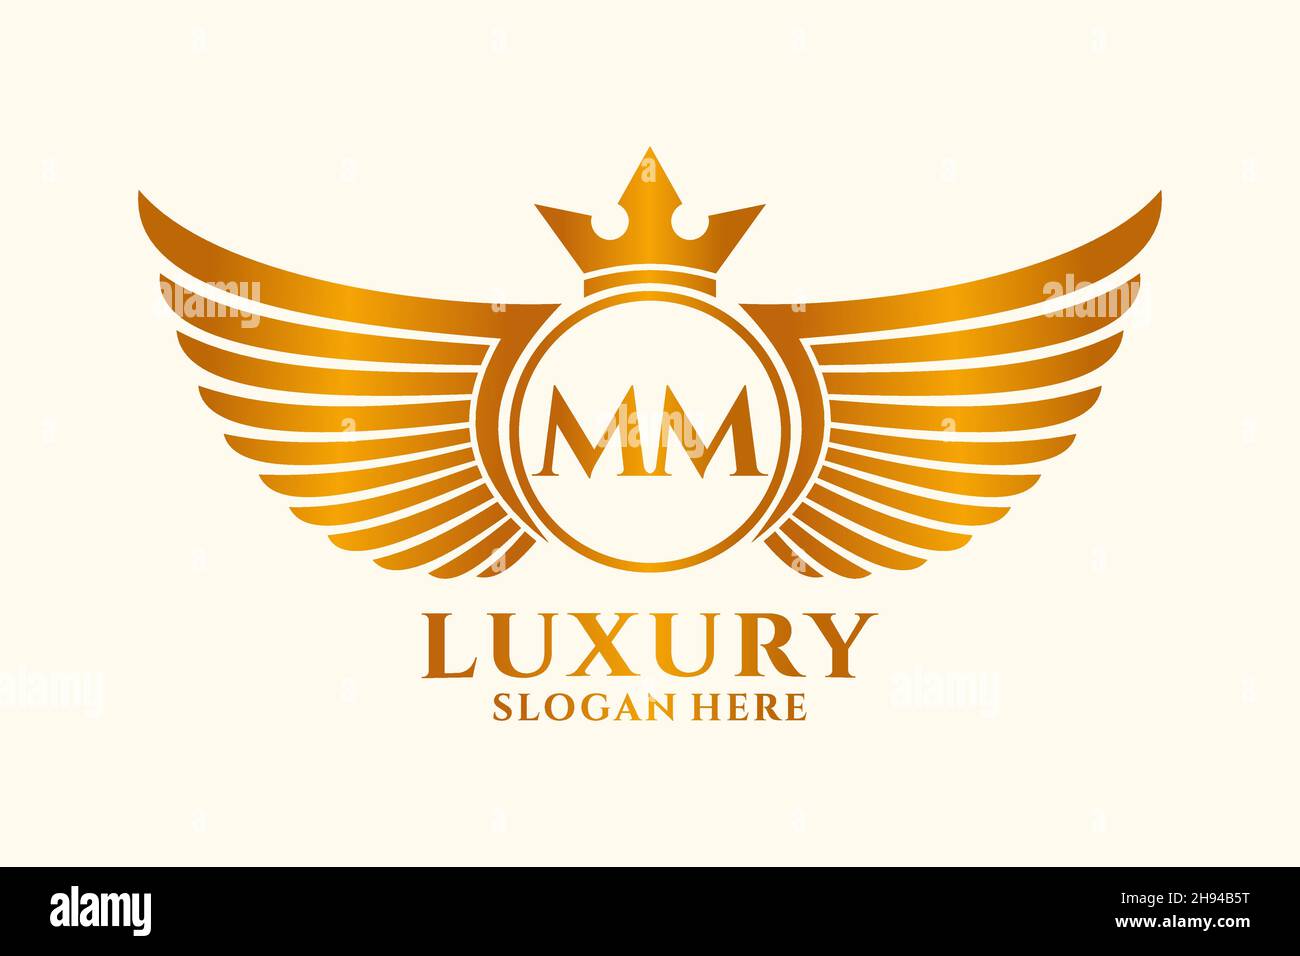 Mm logo emblem monogram with shield style design Vector Image